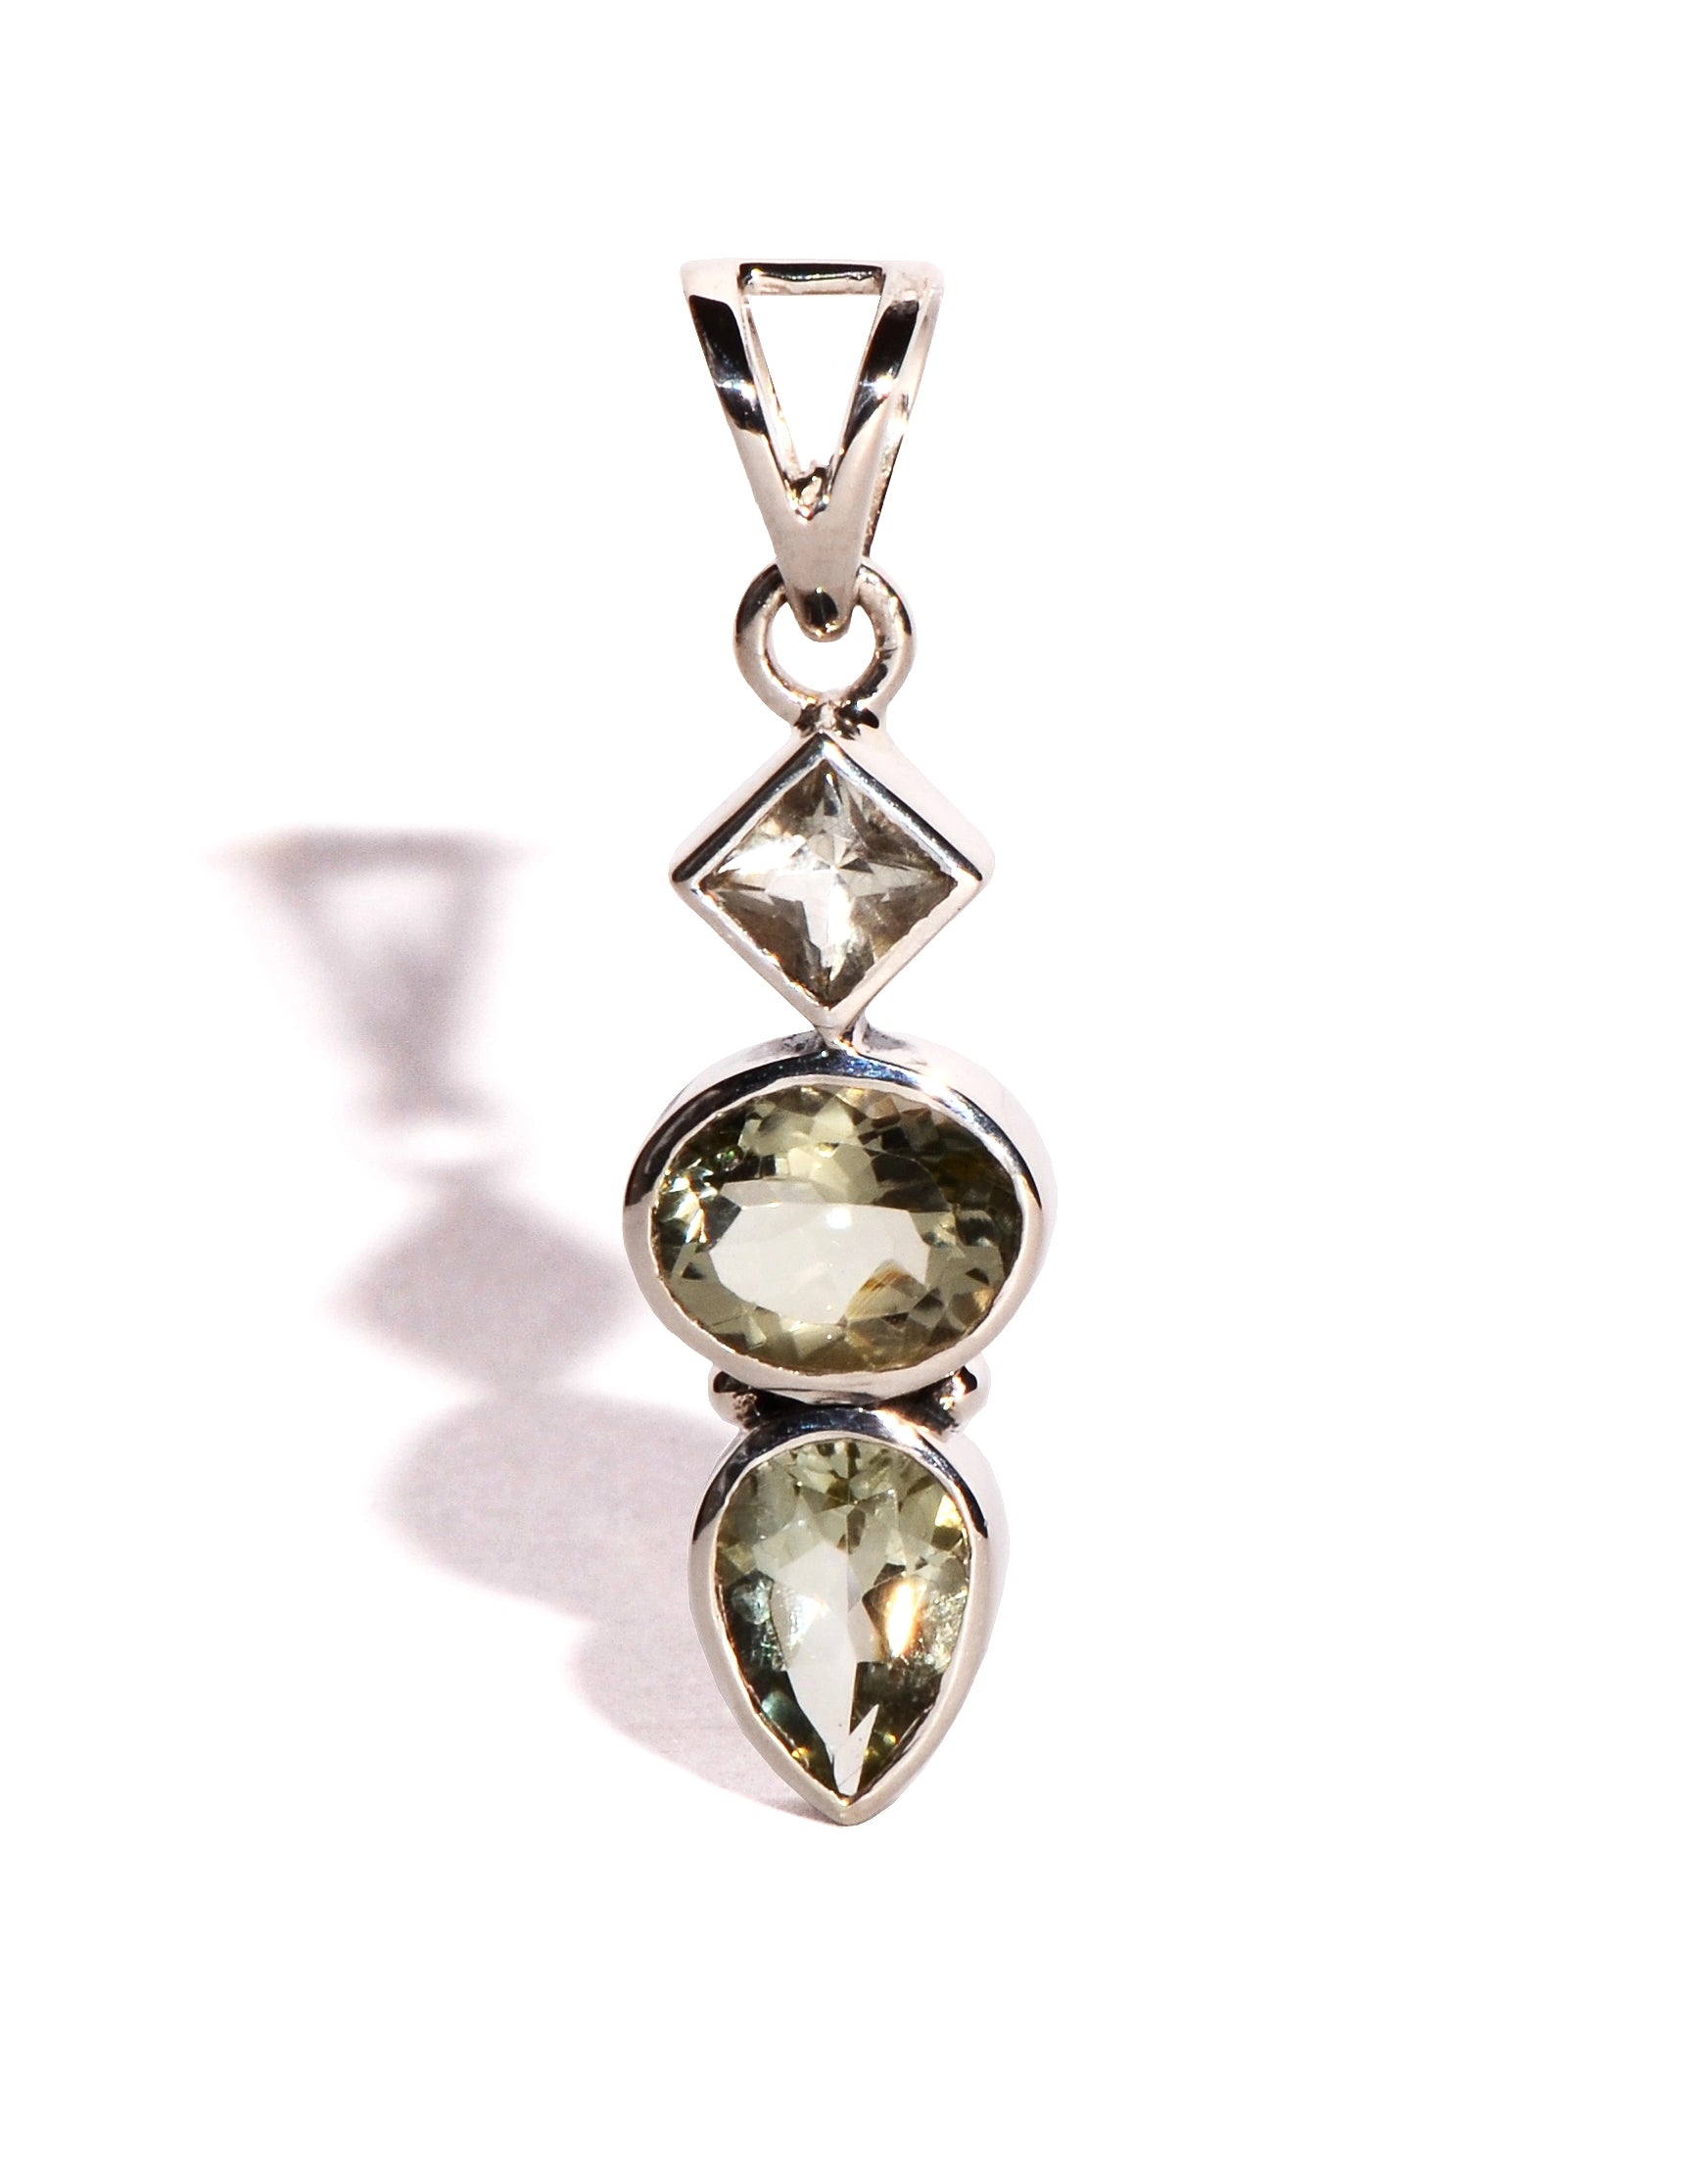 Green Amethyst (Prasiolite) Sterling Silver Pendant - Faceted Crystal